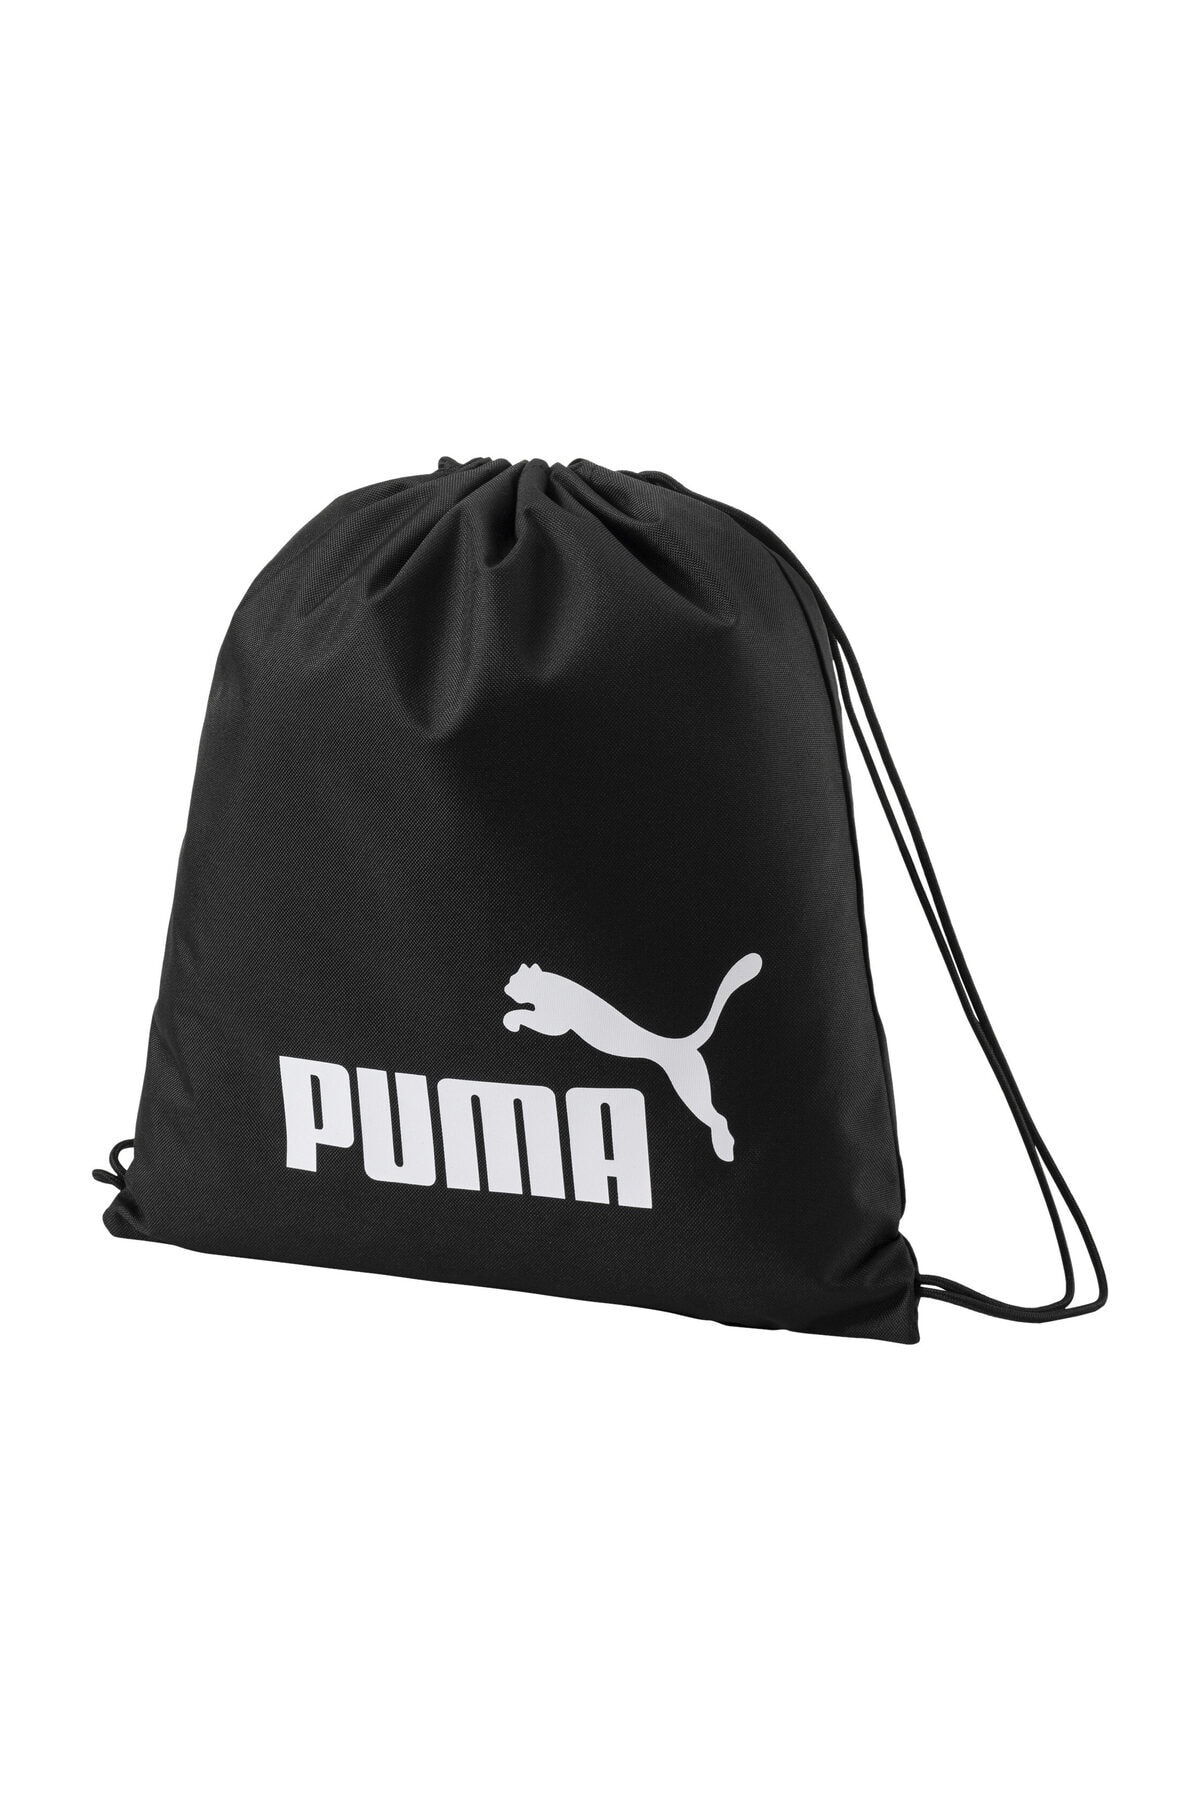 Puma Unisex Spor Çantası - 07494301